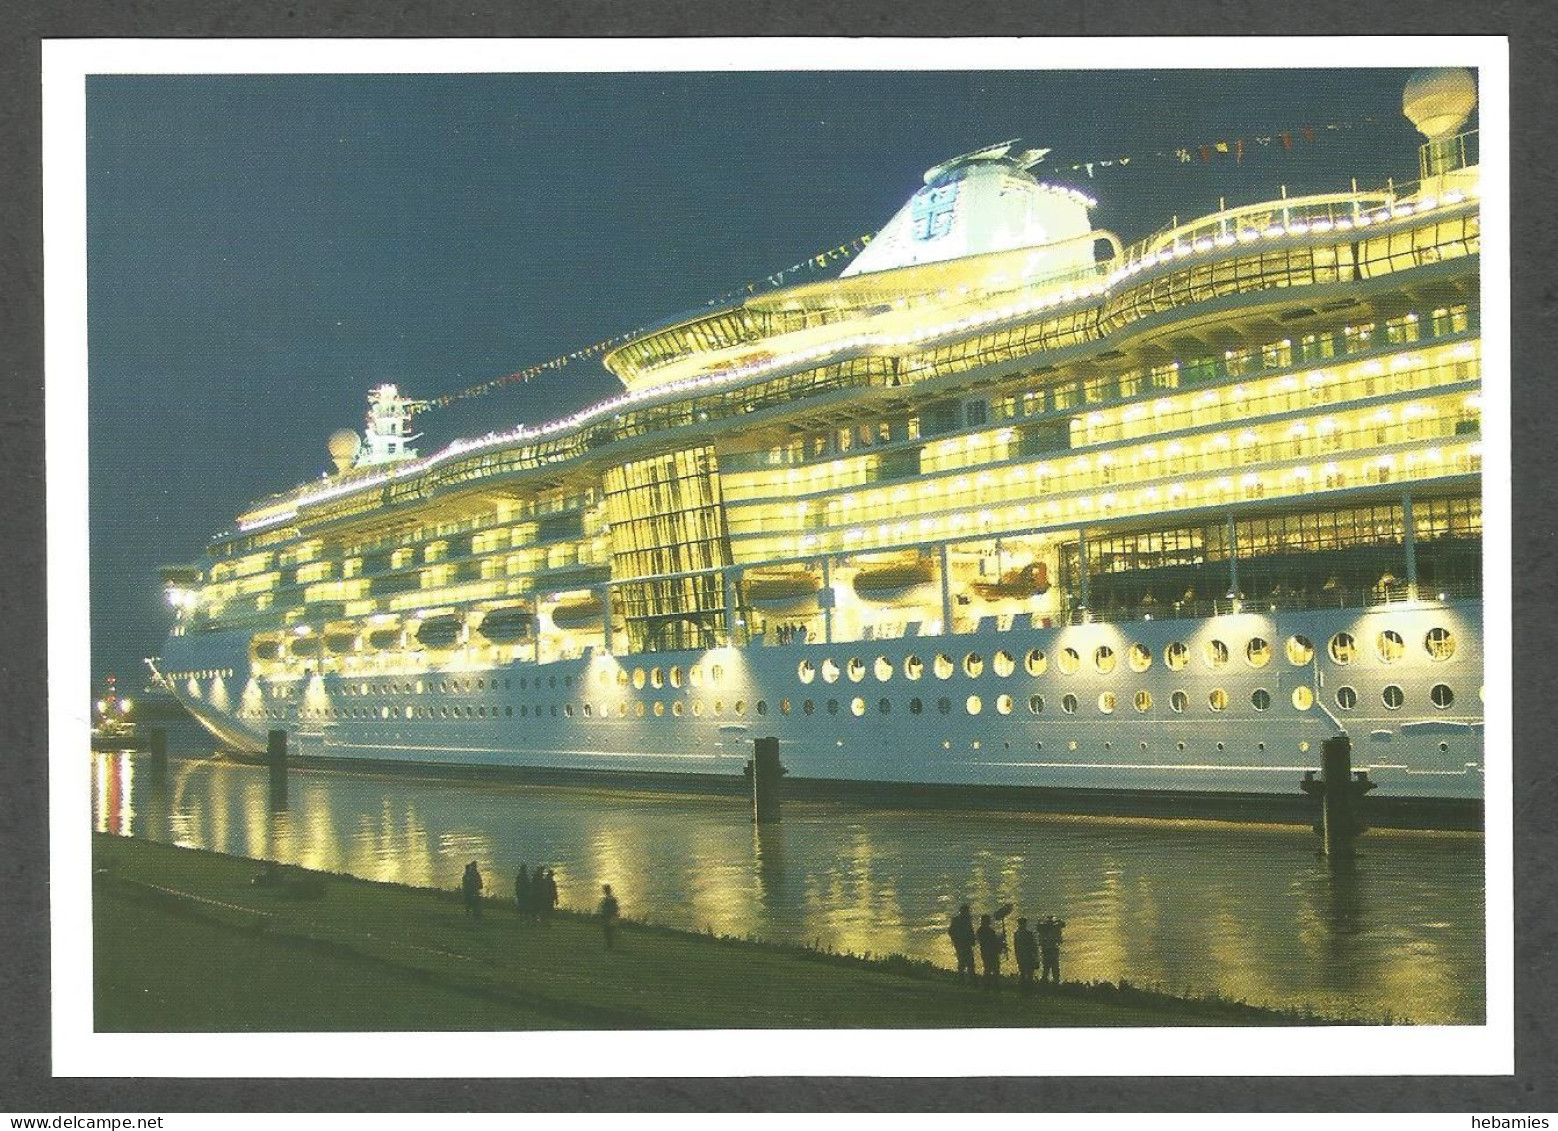 Cruise Liner M/S BRILLIANCE Of The SEAS  - ROYAL CARIBBEAN INTERNATIONAL Shipping Company - - Traghetti